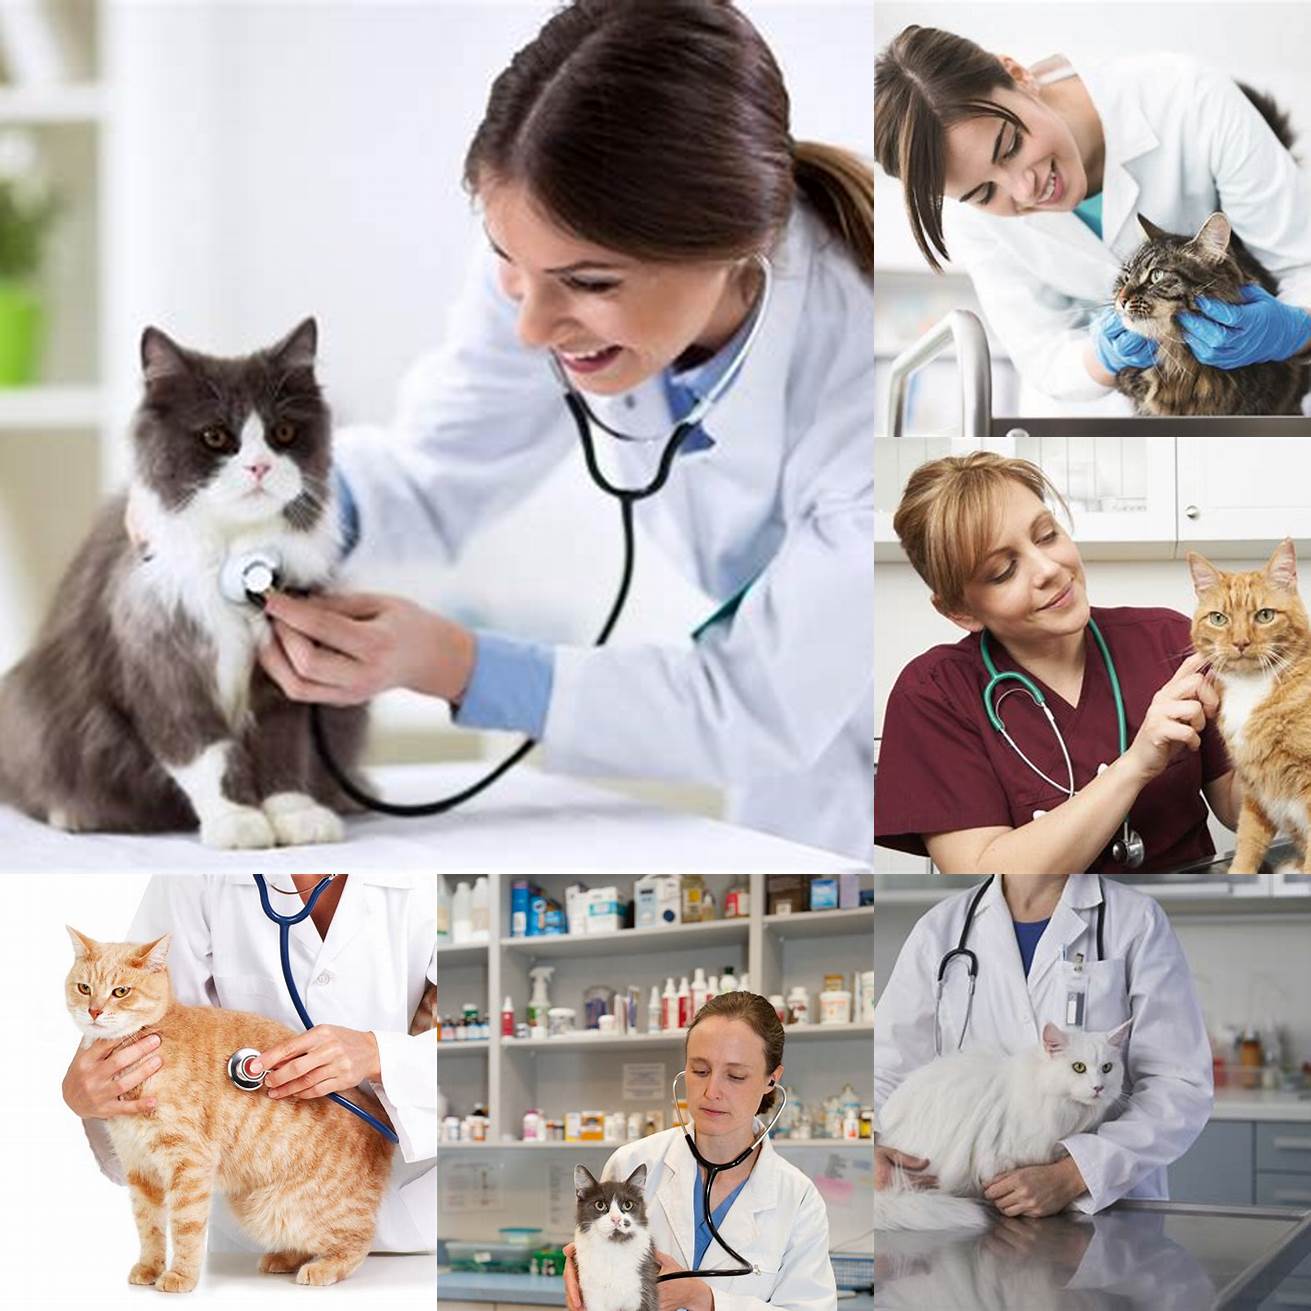 Cat and veterinarian